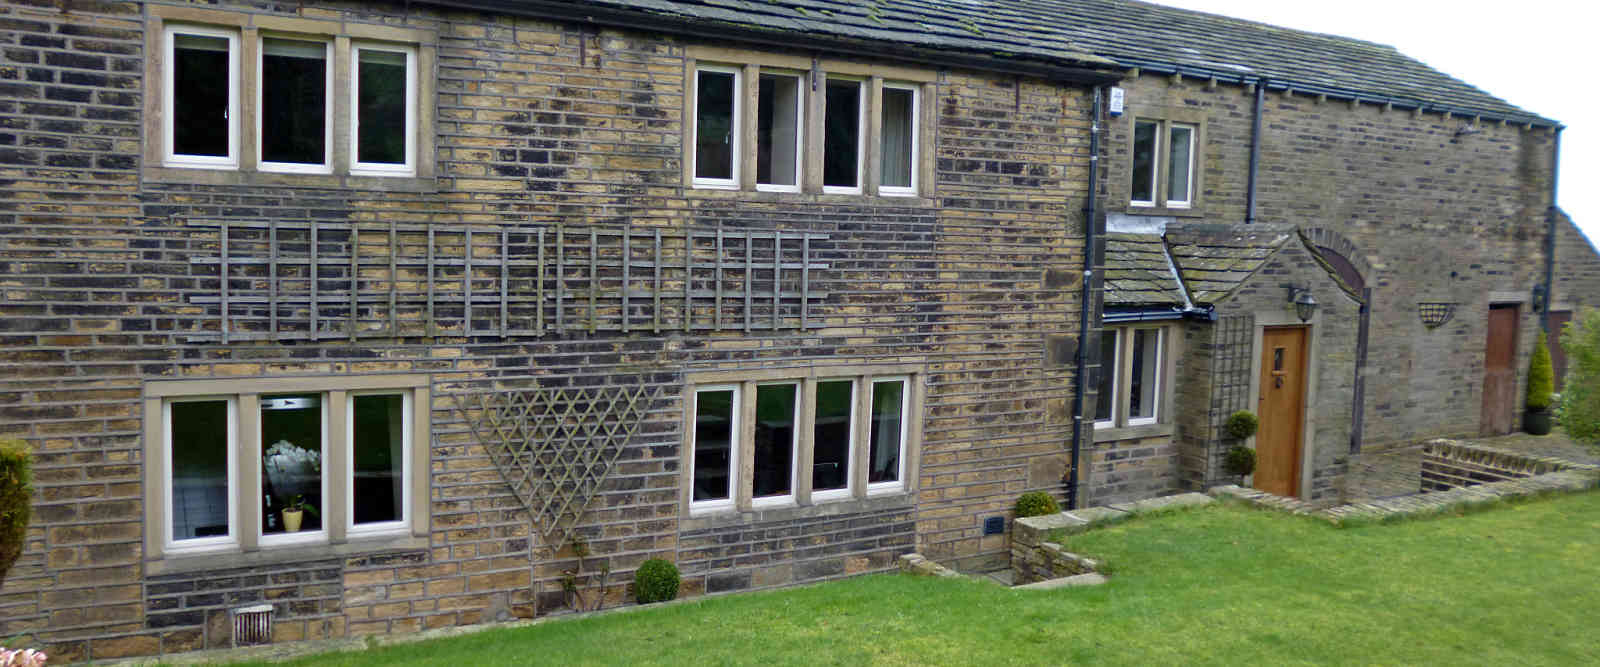 Heritage aluminium windows for listed property